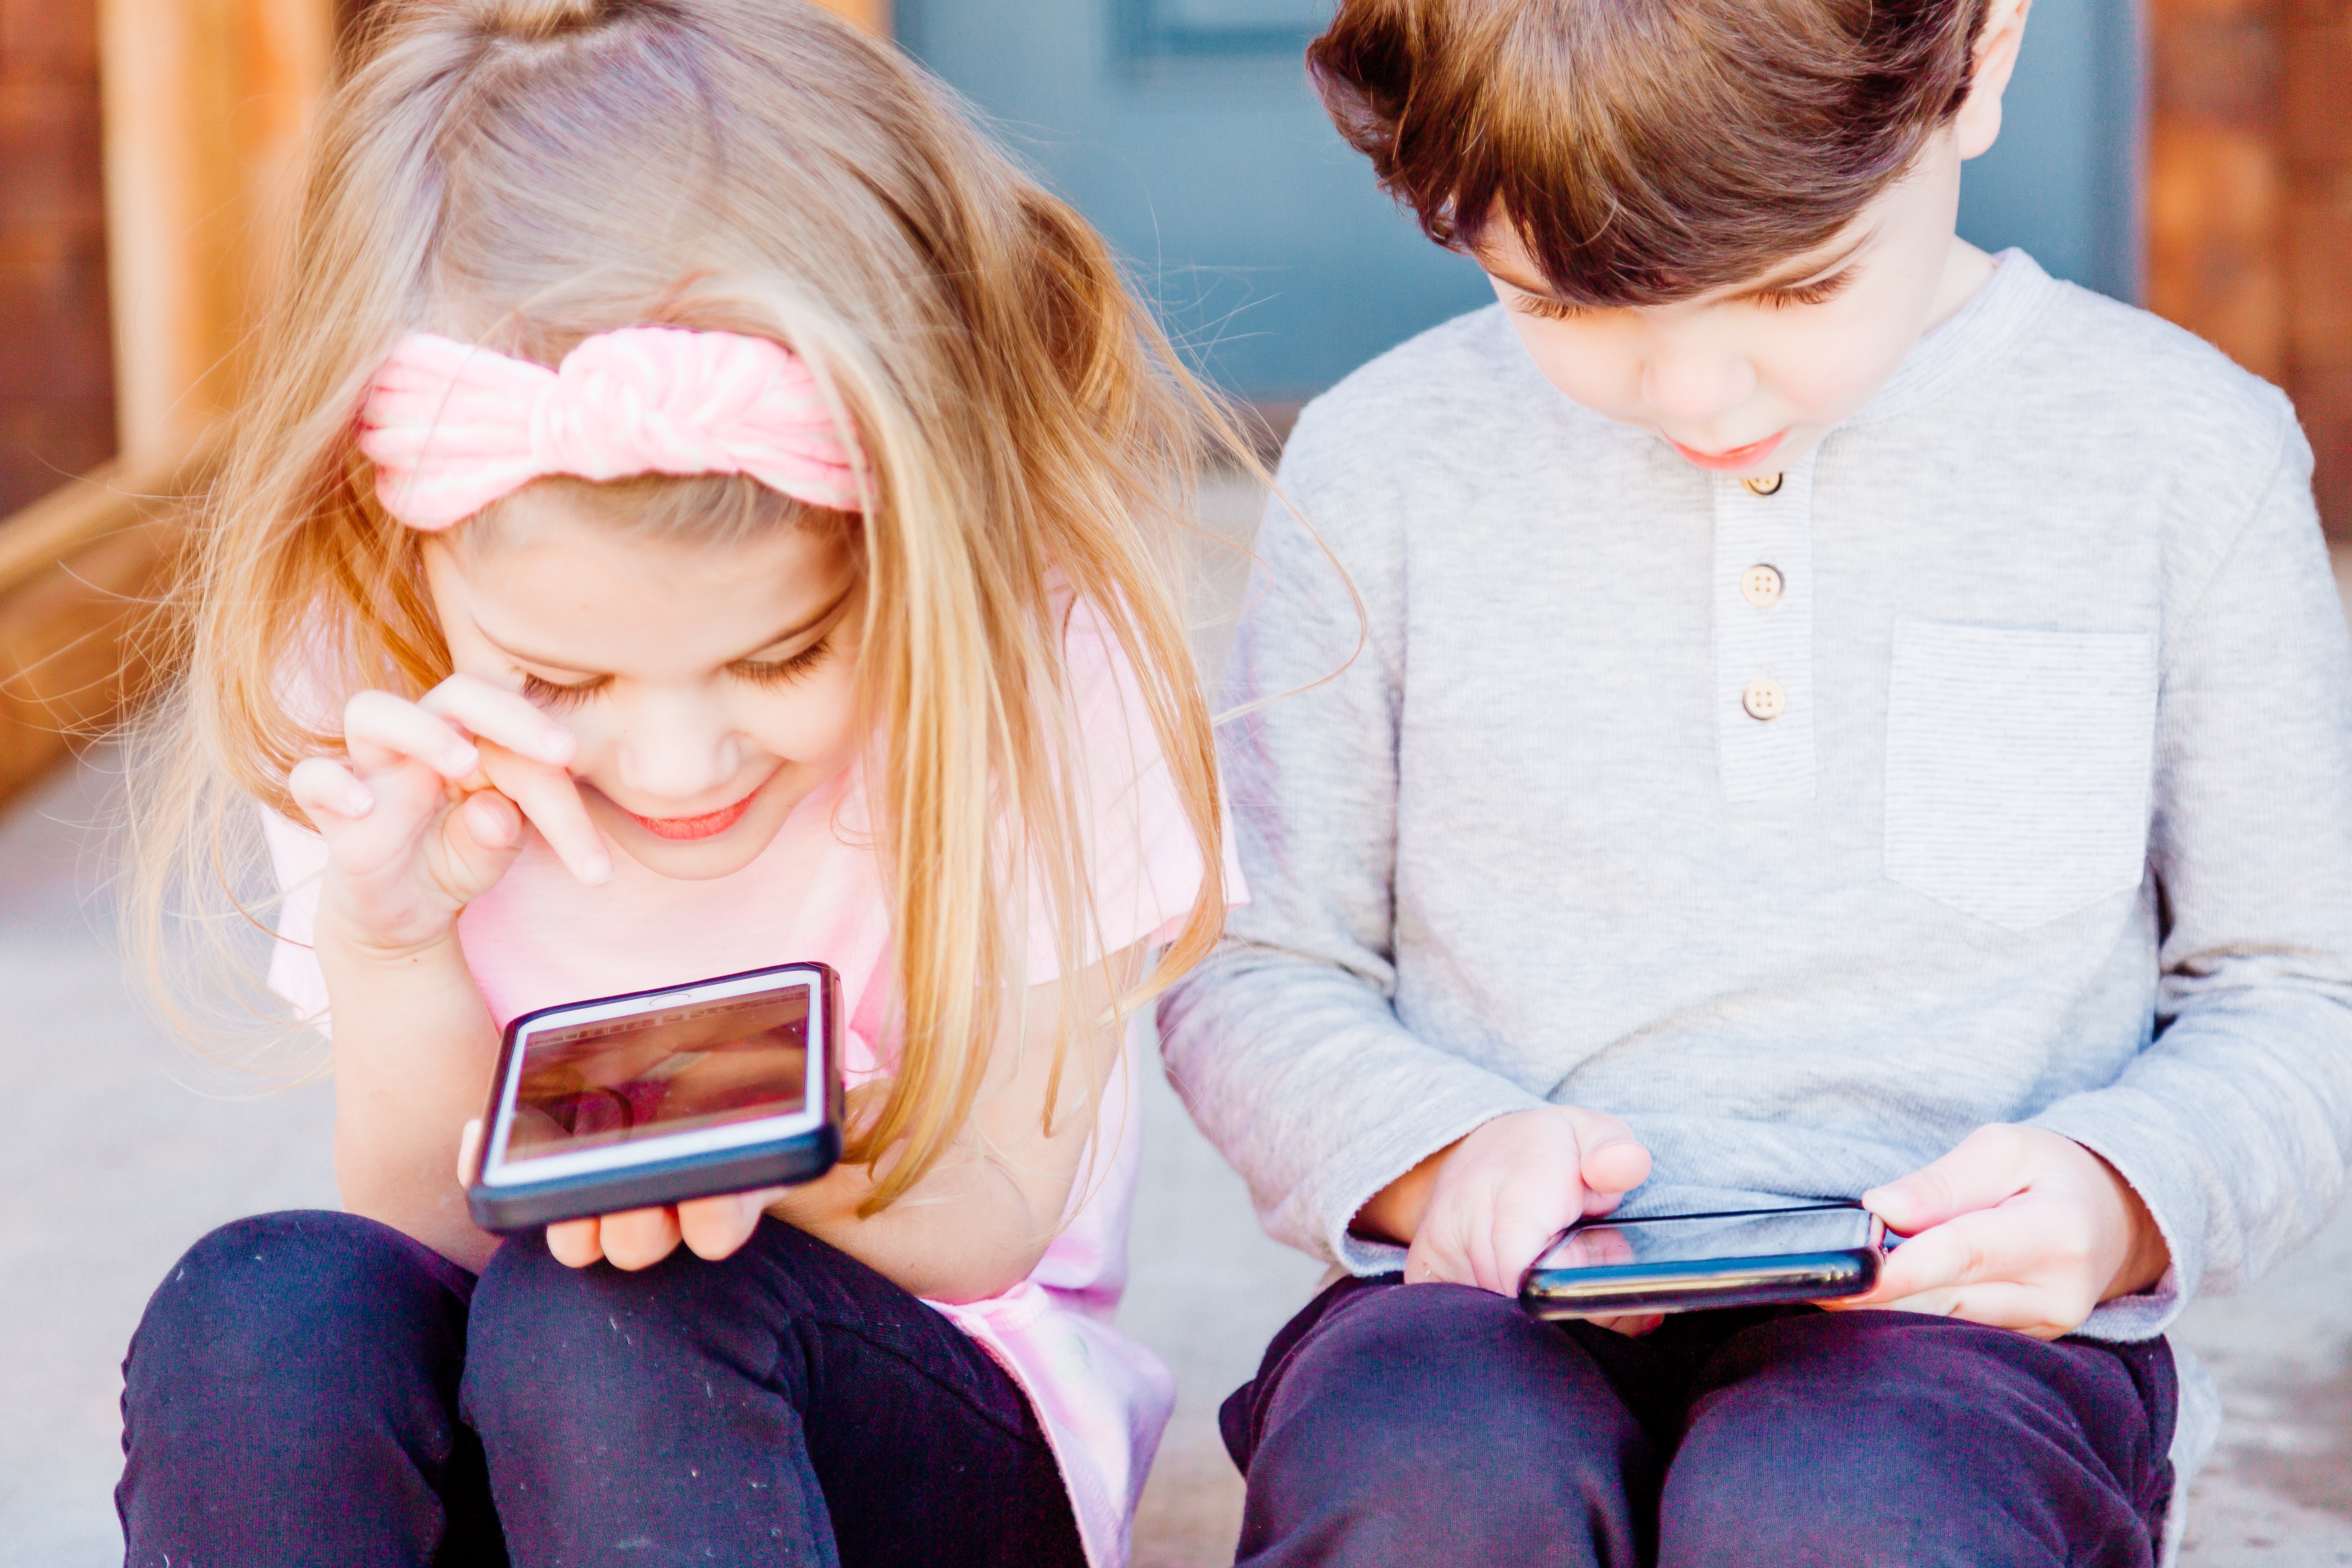 Children on devices